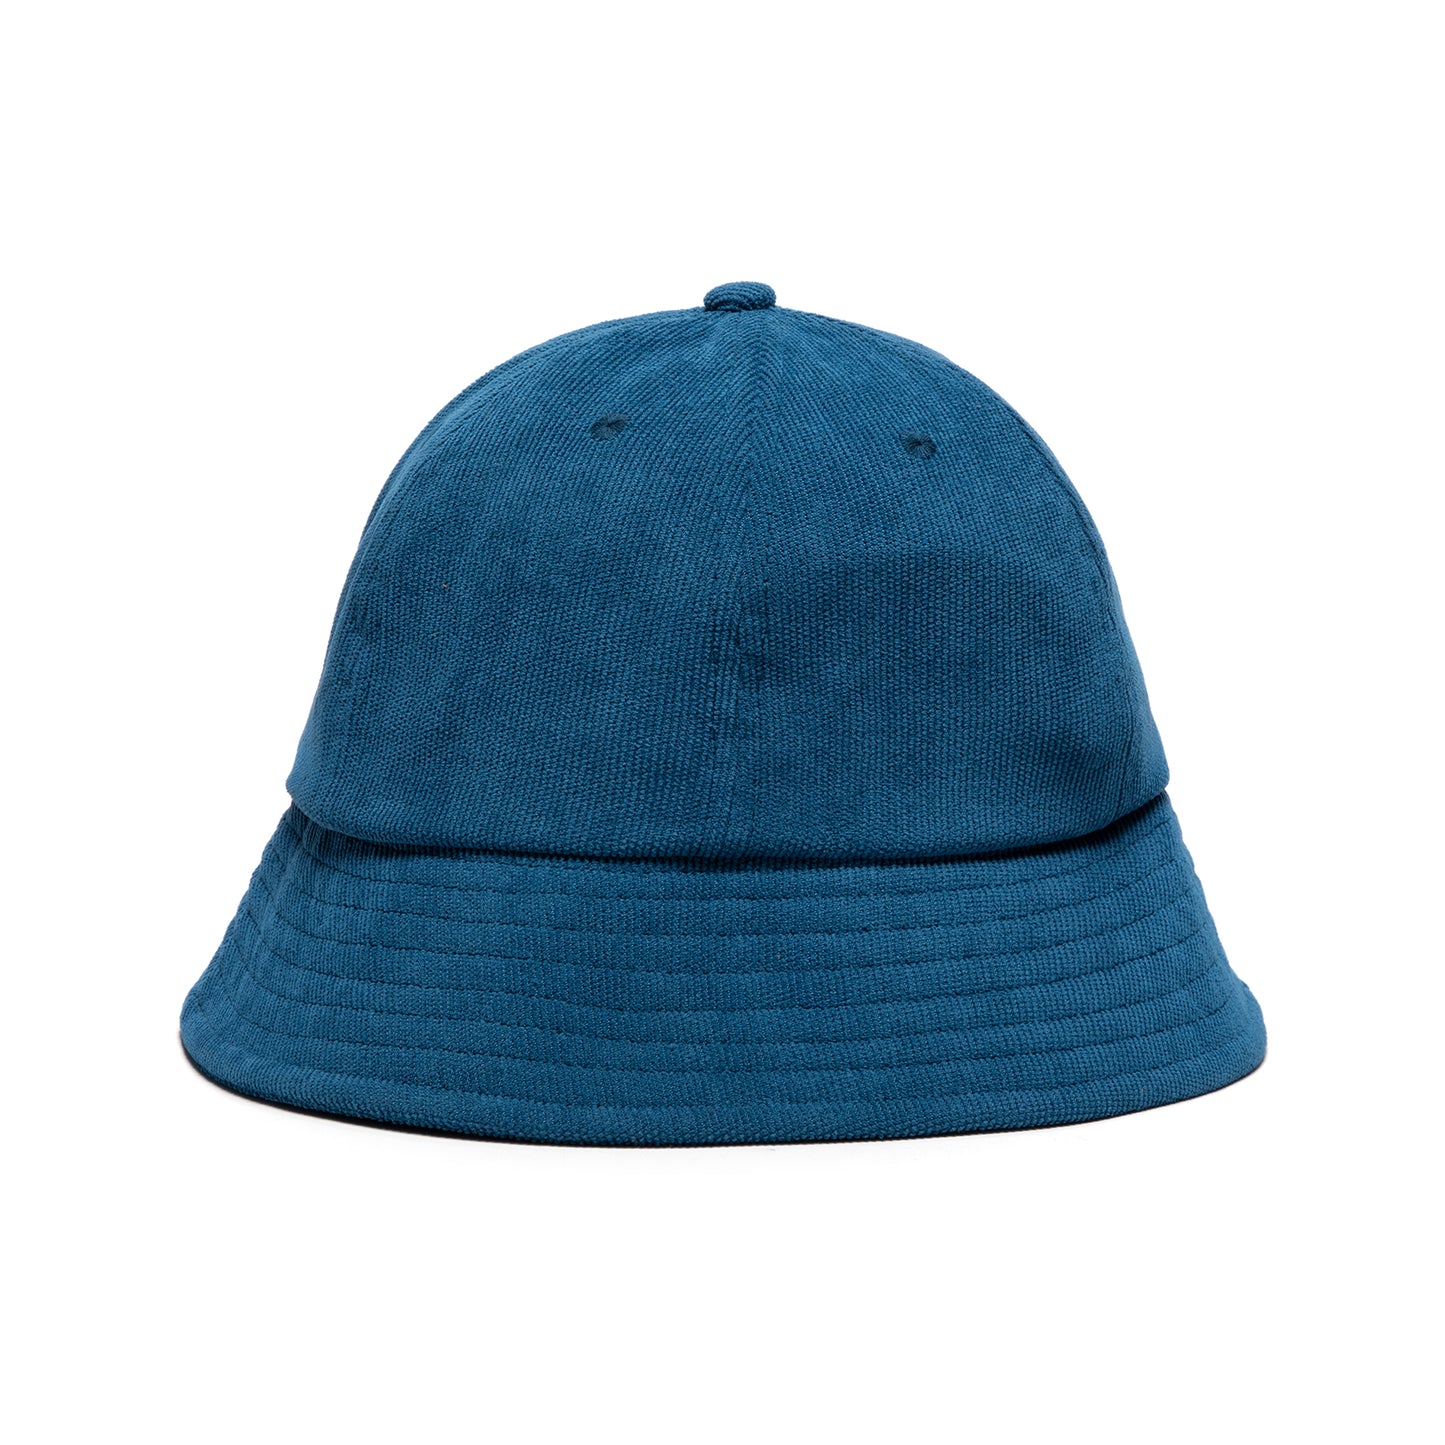 Mifland Corduroy Bucket Hat (Blue)